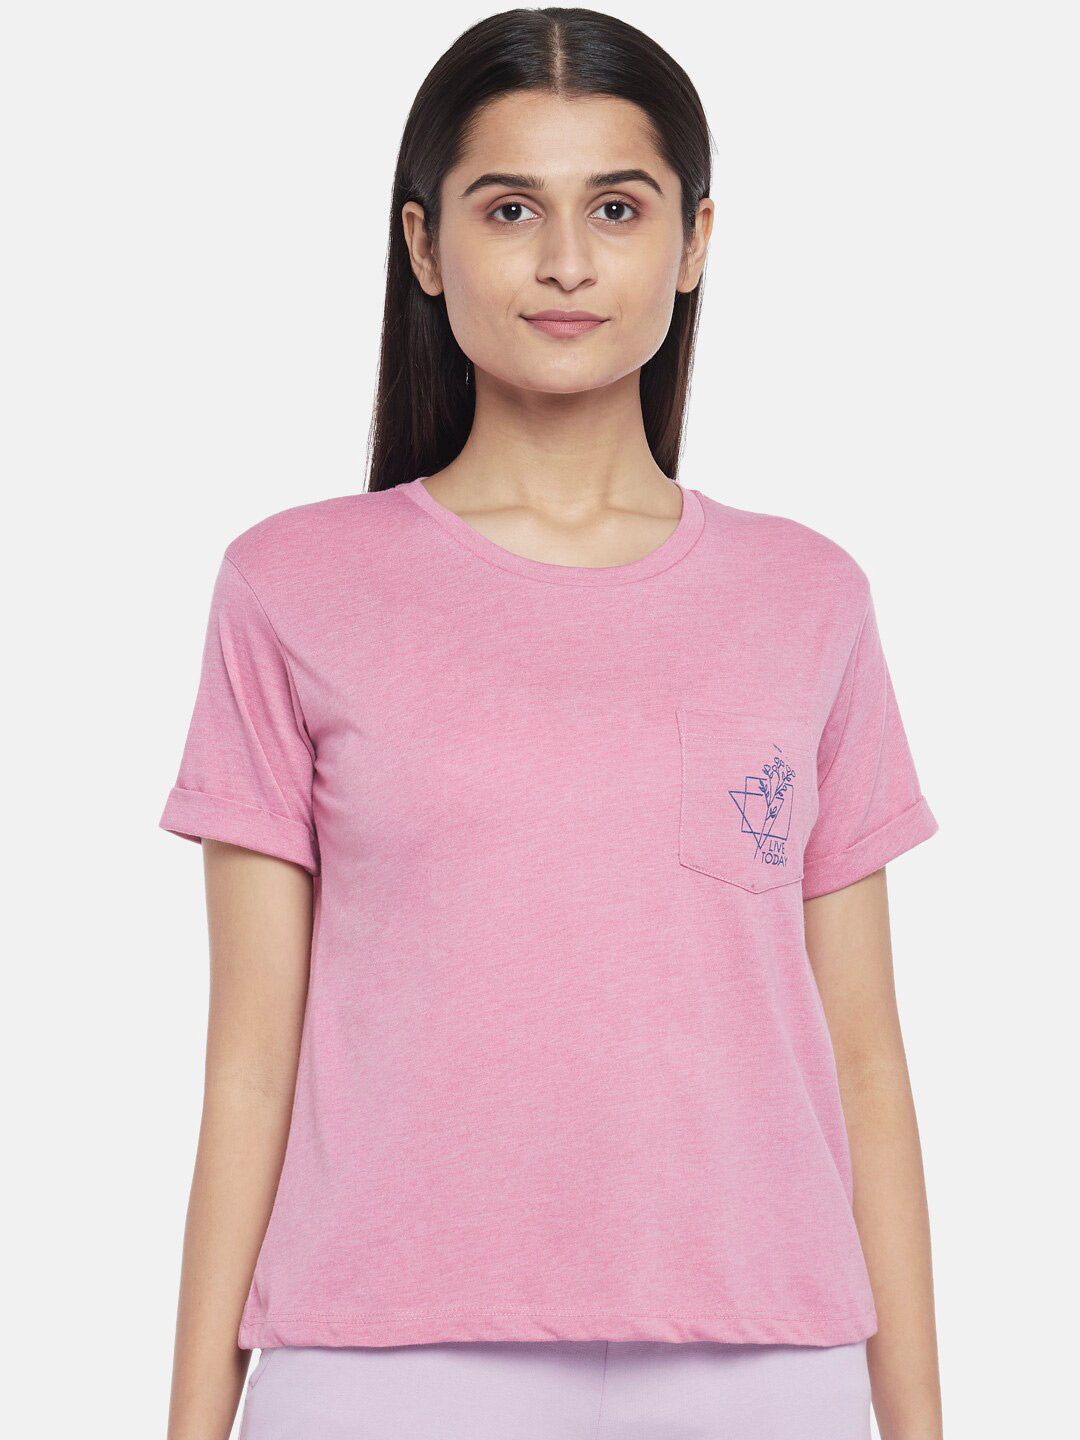 Dreamz by Pantaloons Women Pink Pocket Lounge T-shirt Price in India